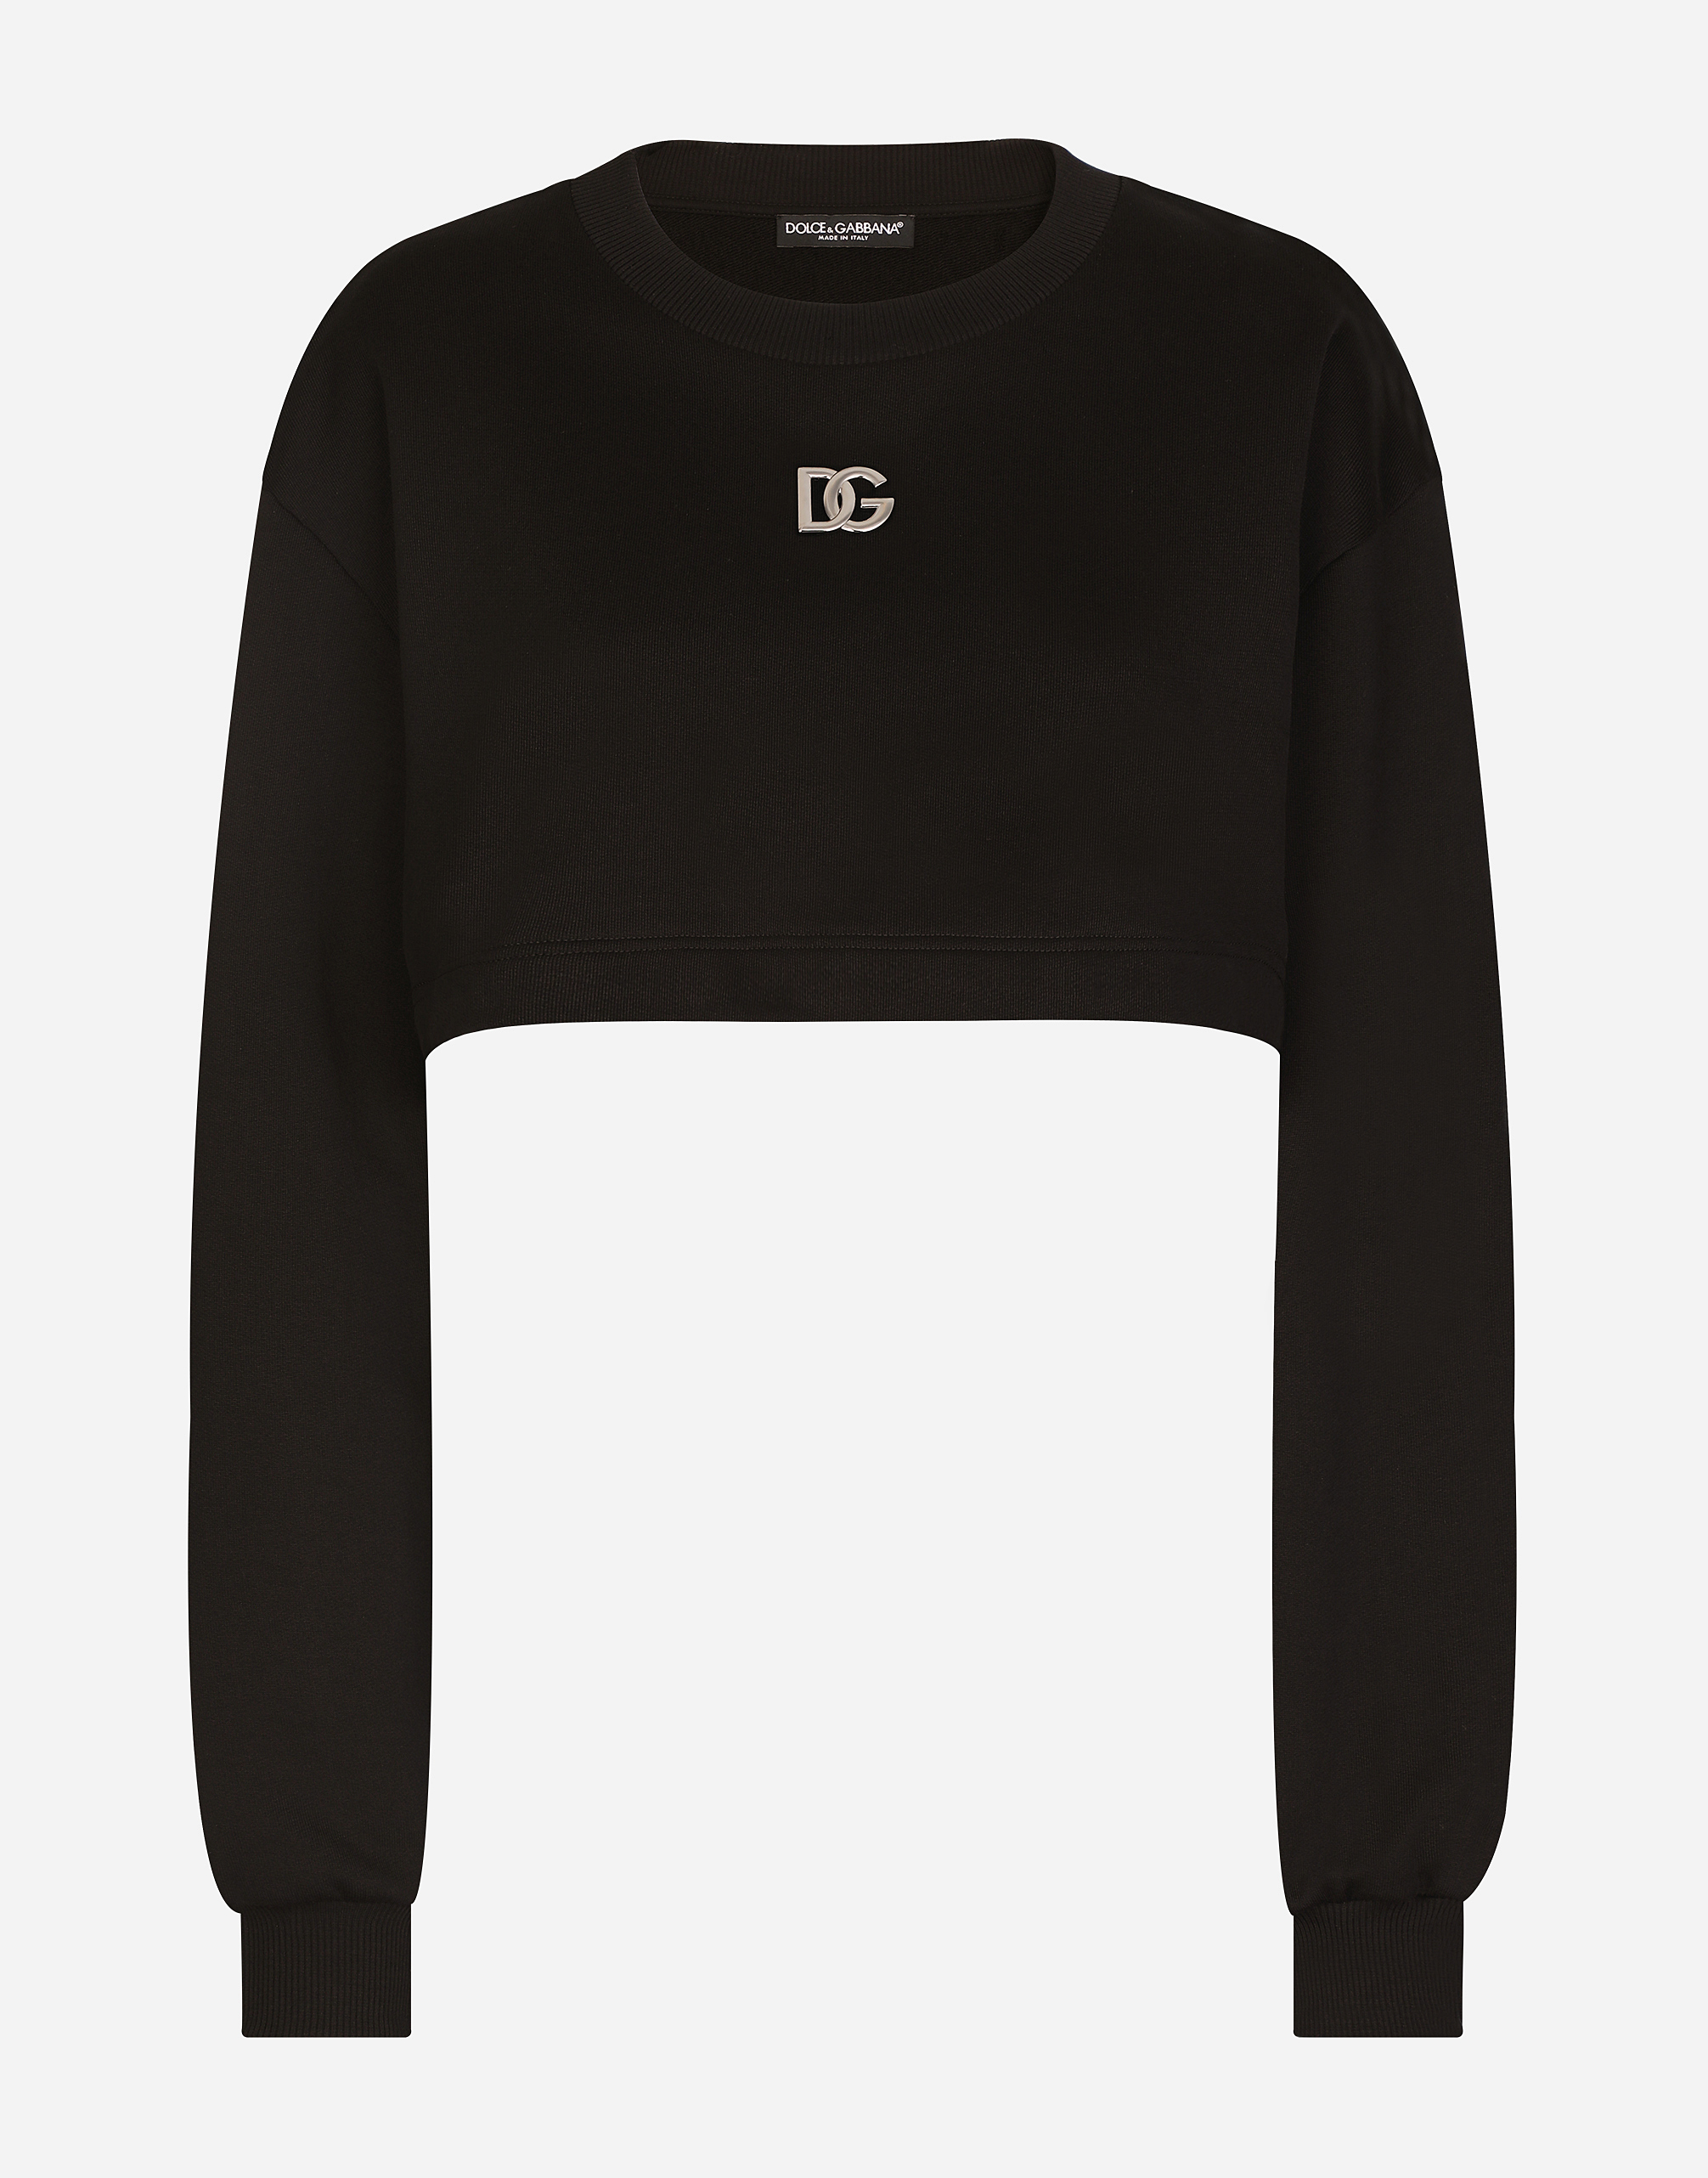 Cropped jersey sweatshirt with DG logo in Black